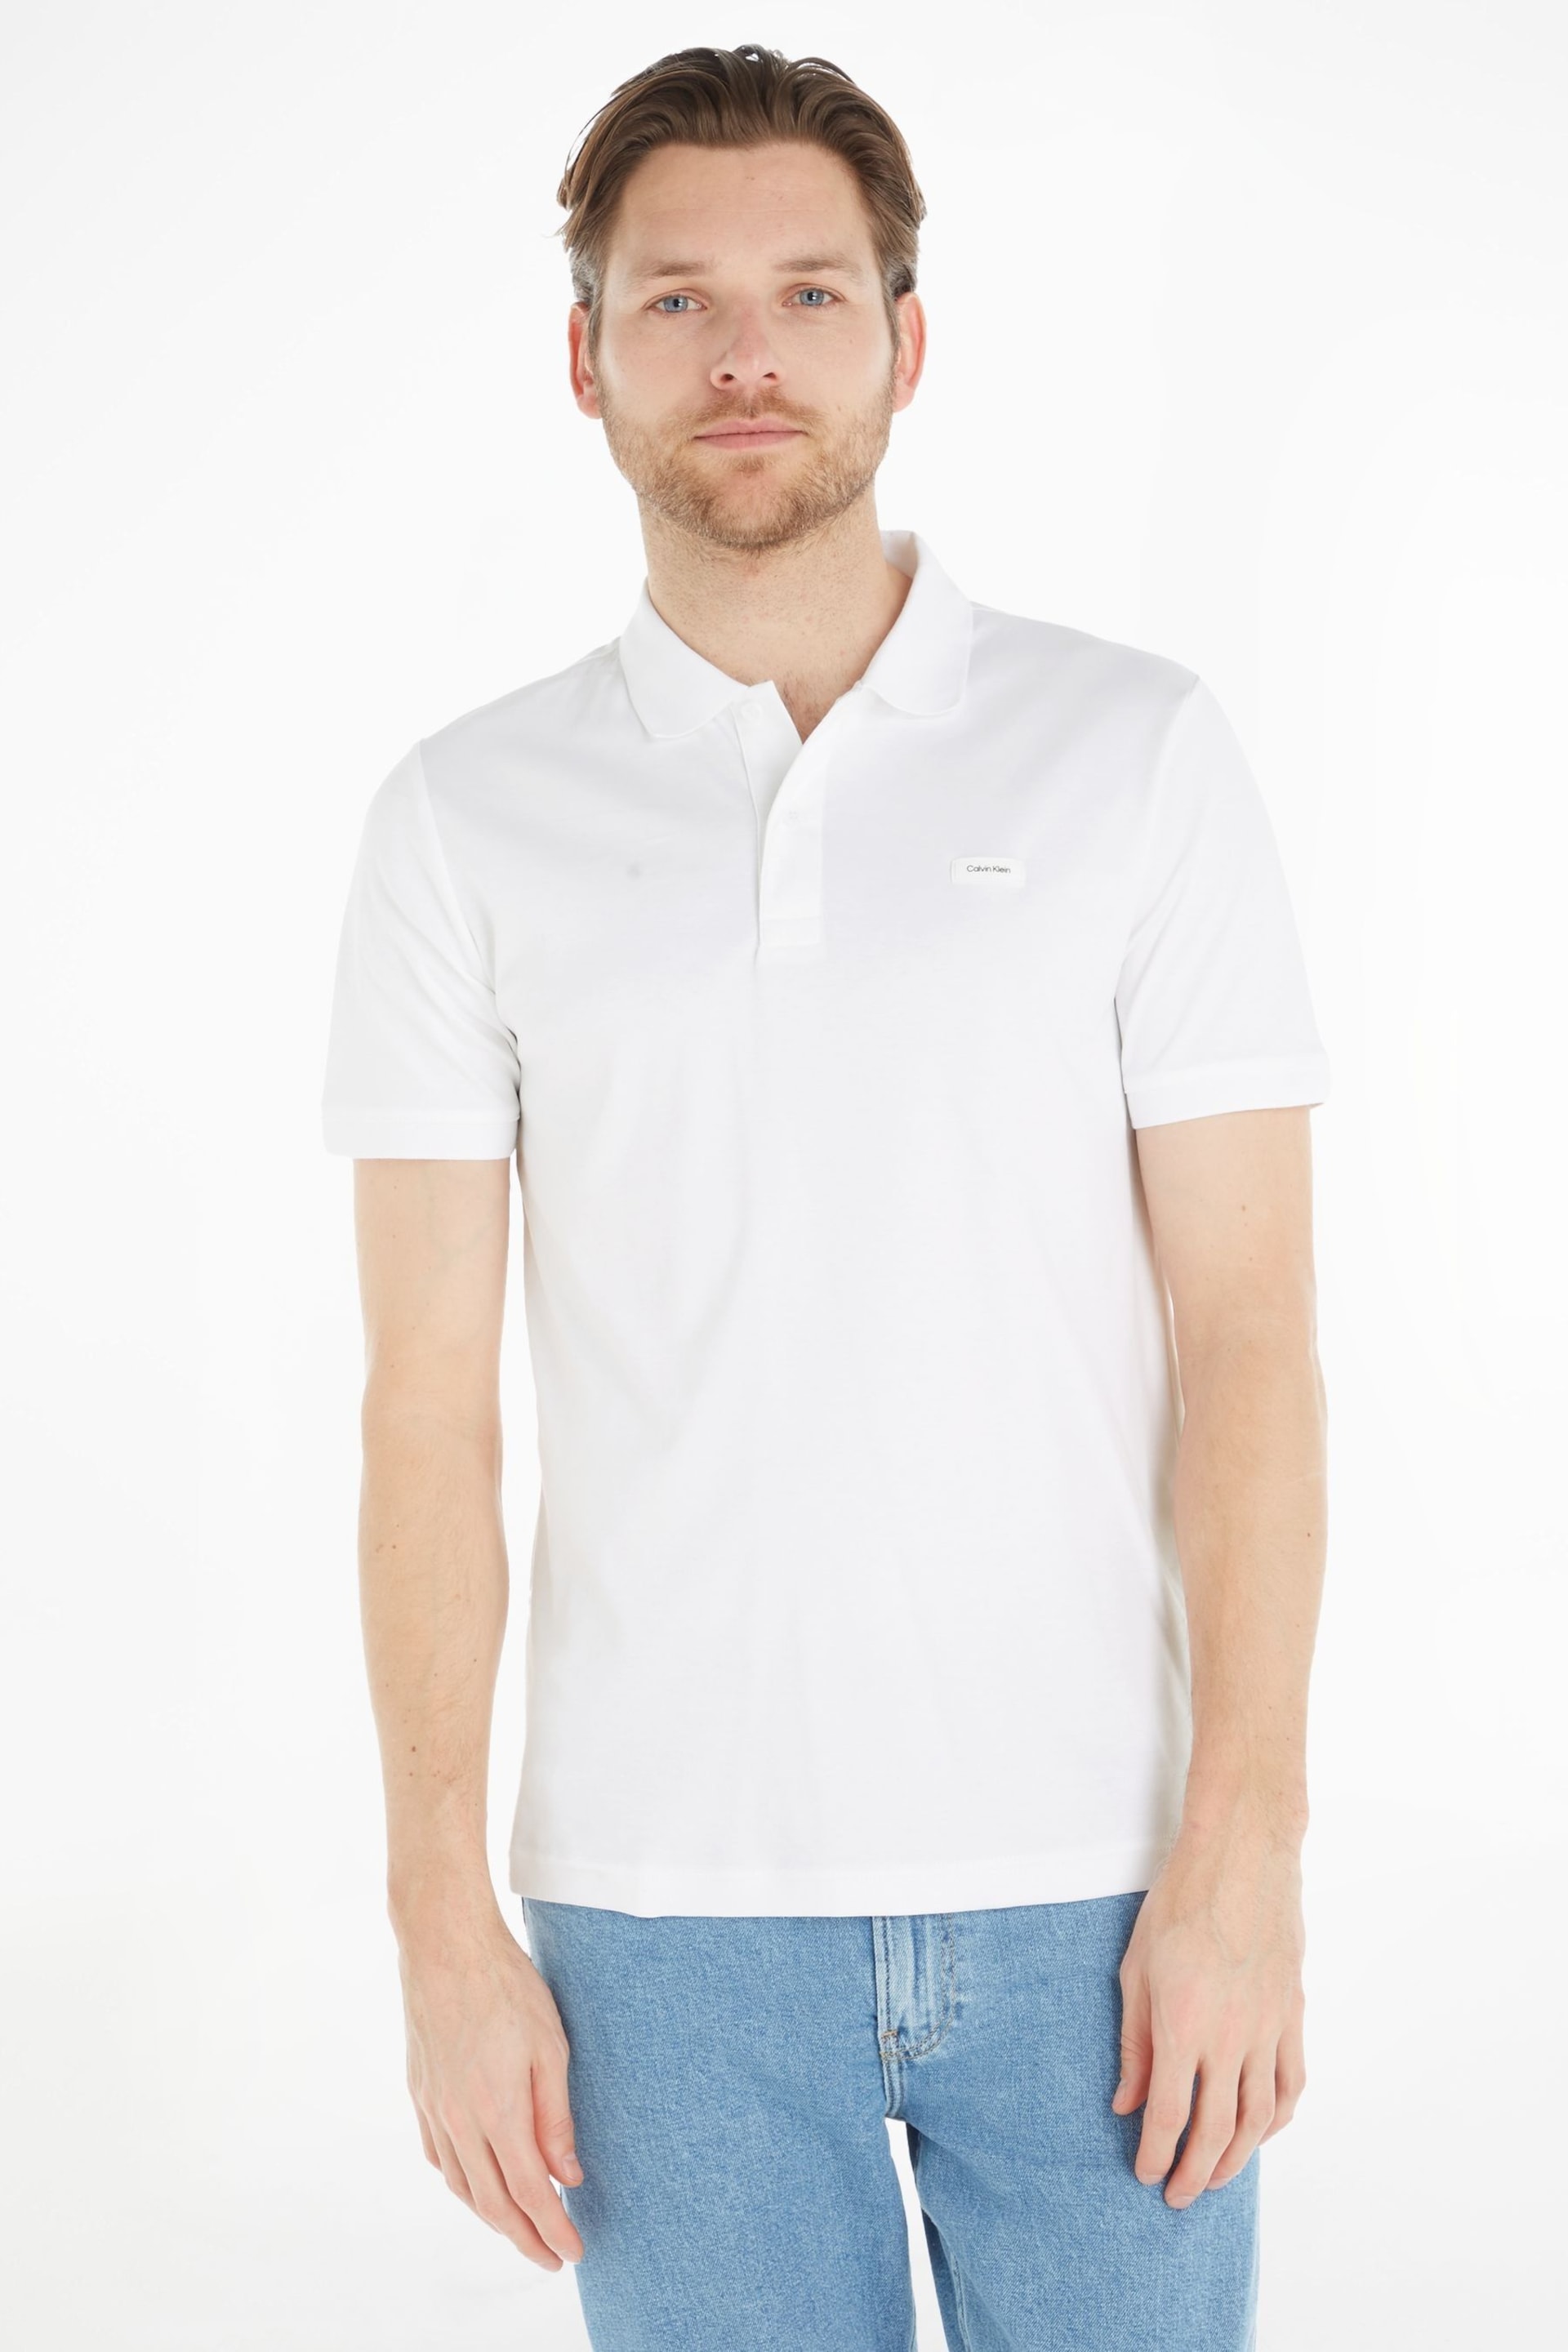 Calvin Klein White Slim Essential Smooth Cotton Polo Shirt - Image 1 of 5